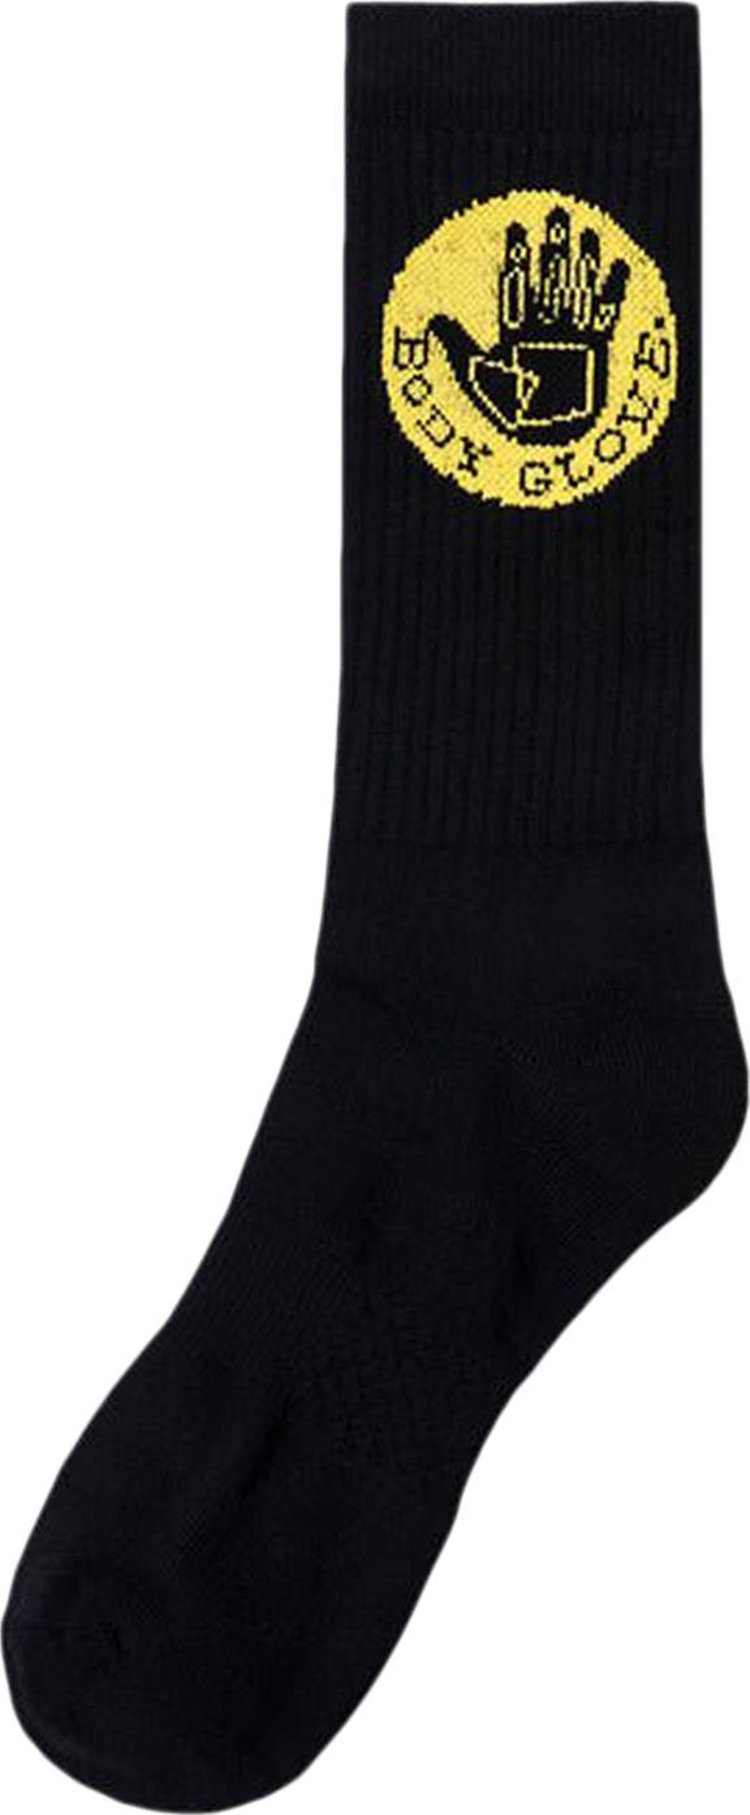 Anti Social Social Club x Body Glove Toenails Socks 'Black'